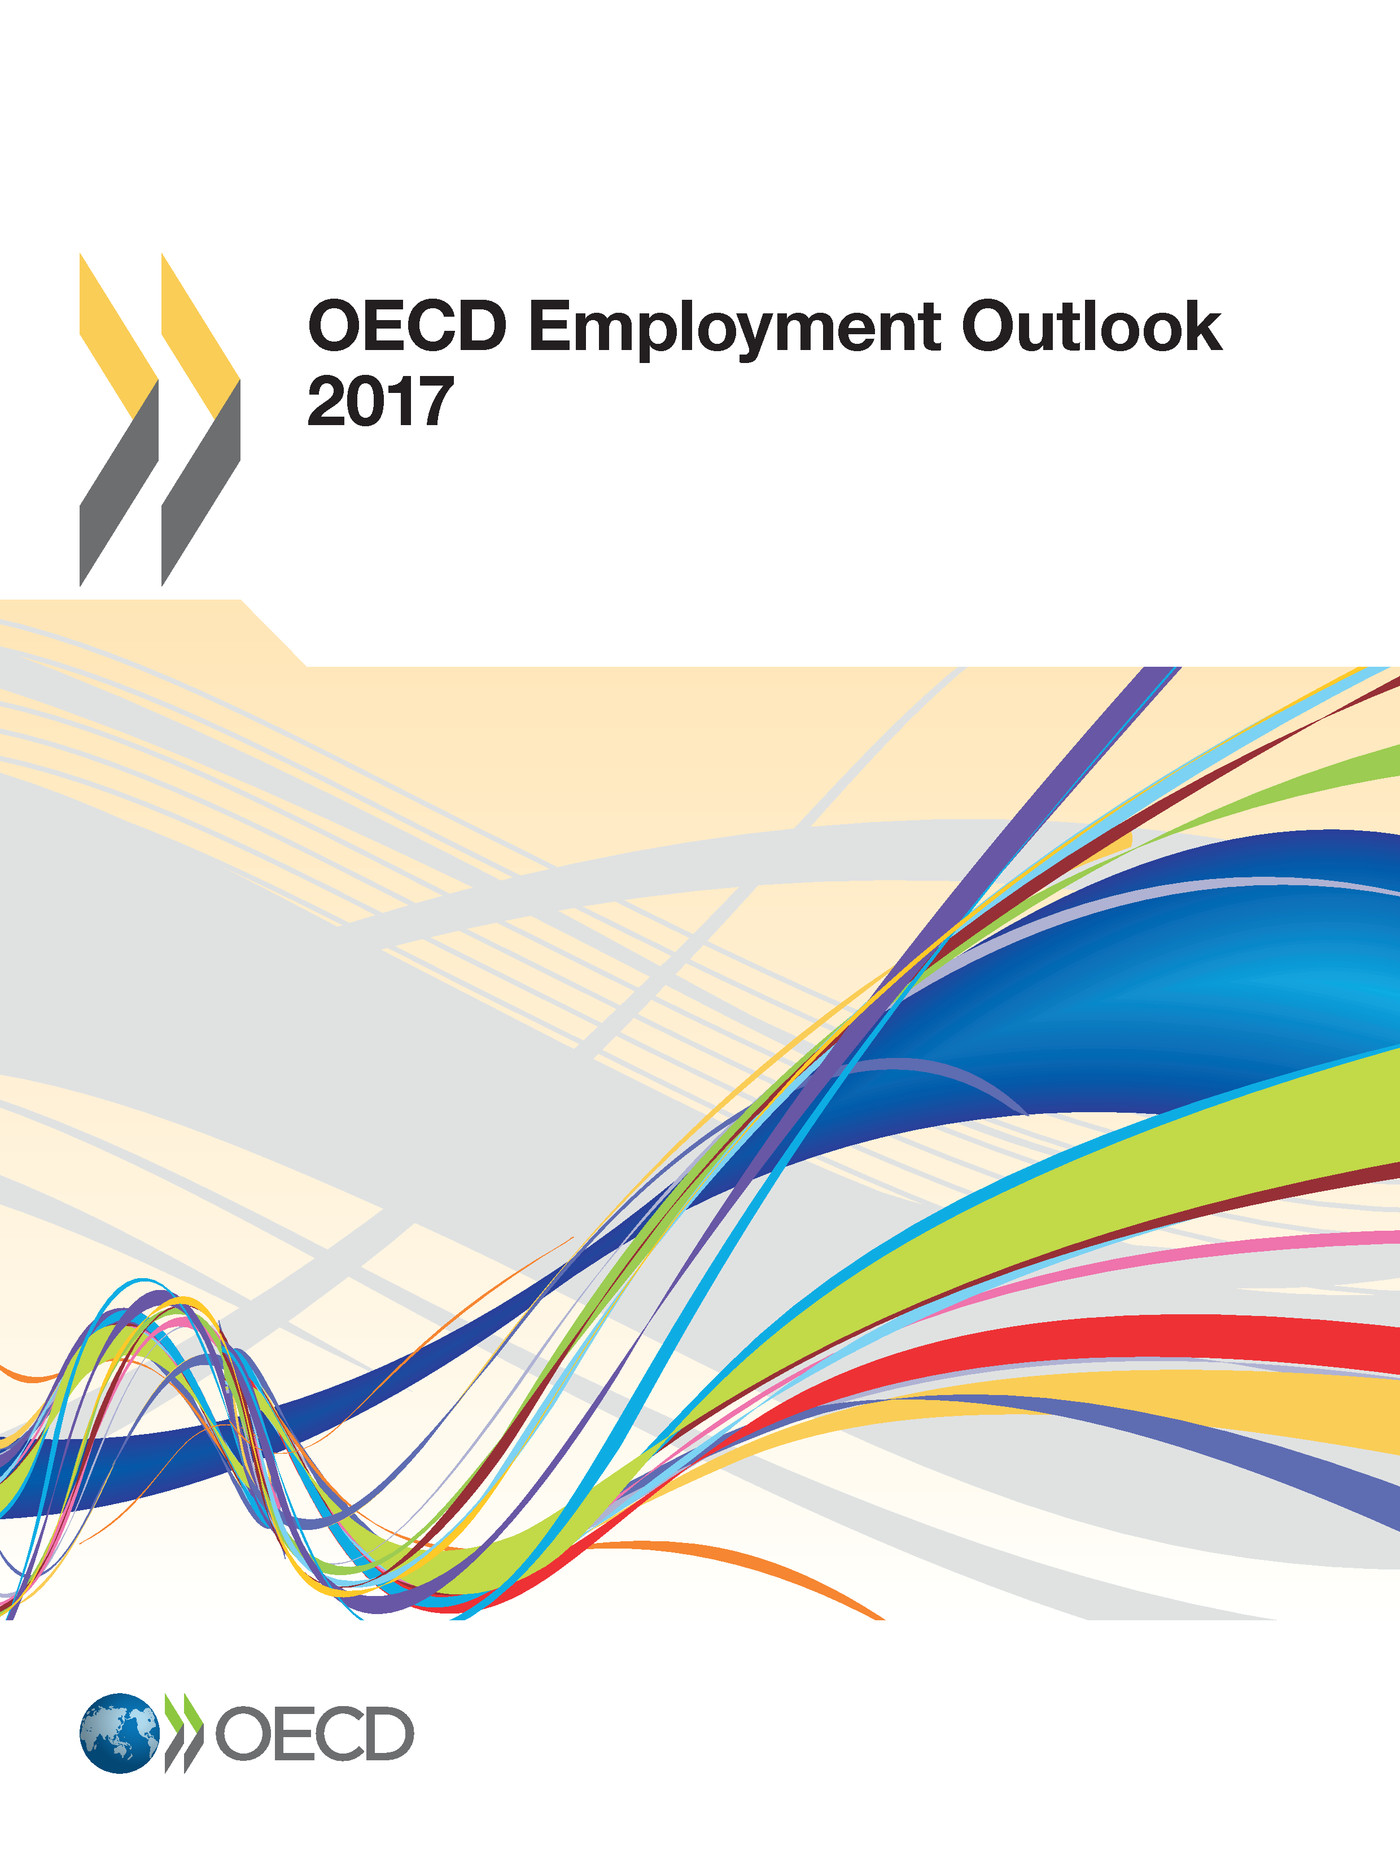 OECD Employment Outlook 2017 -  Collectif - OCDE / OECD